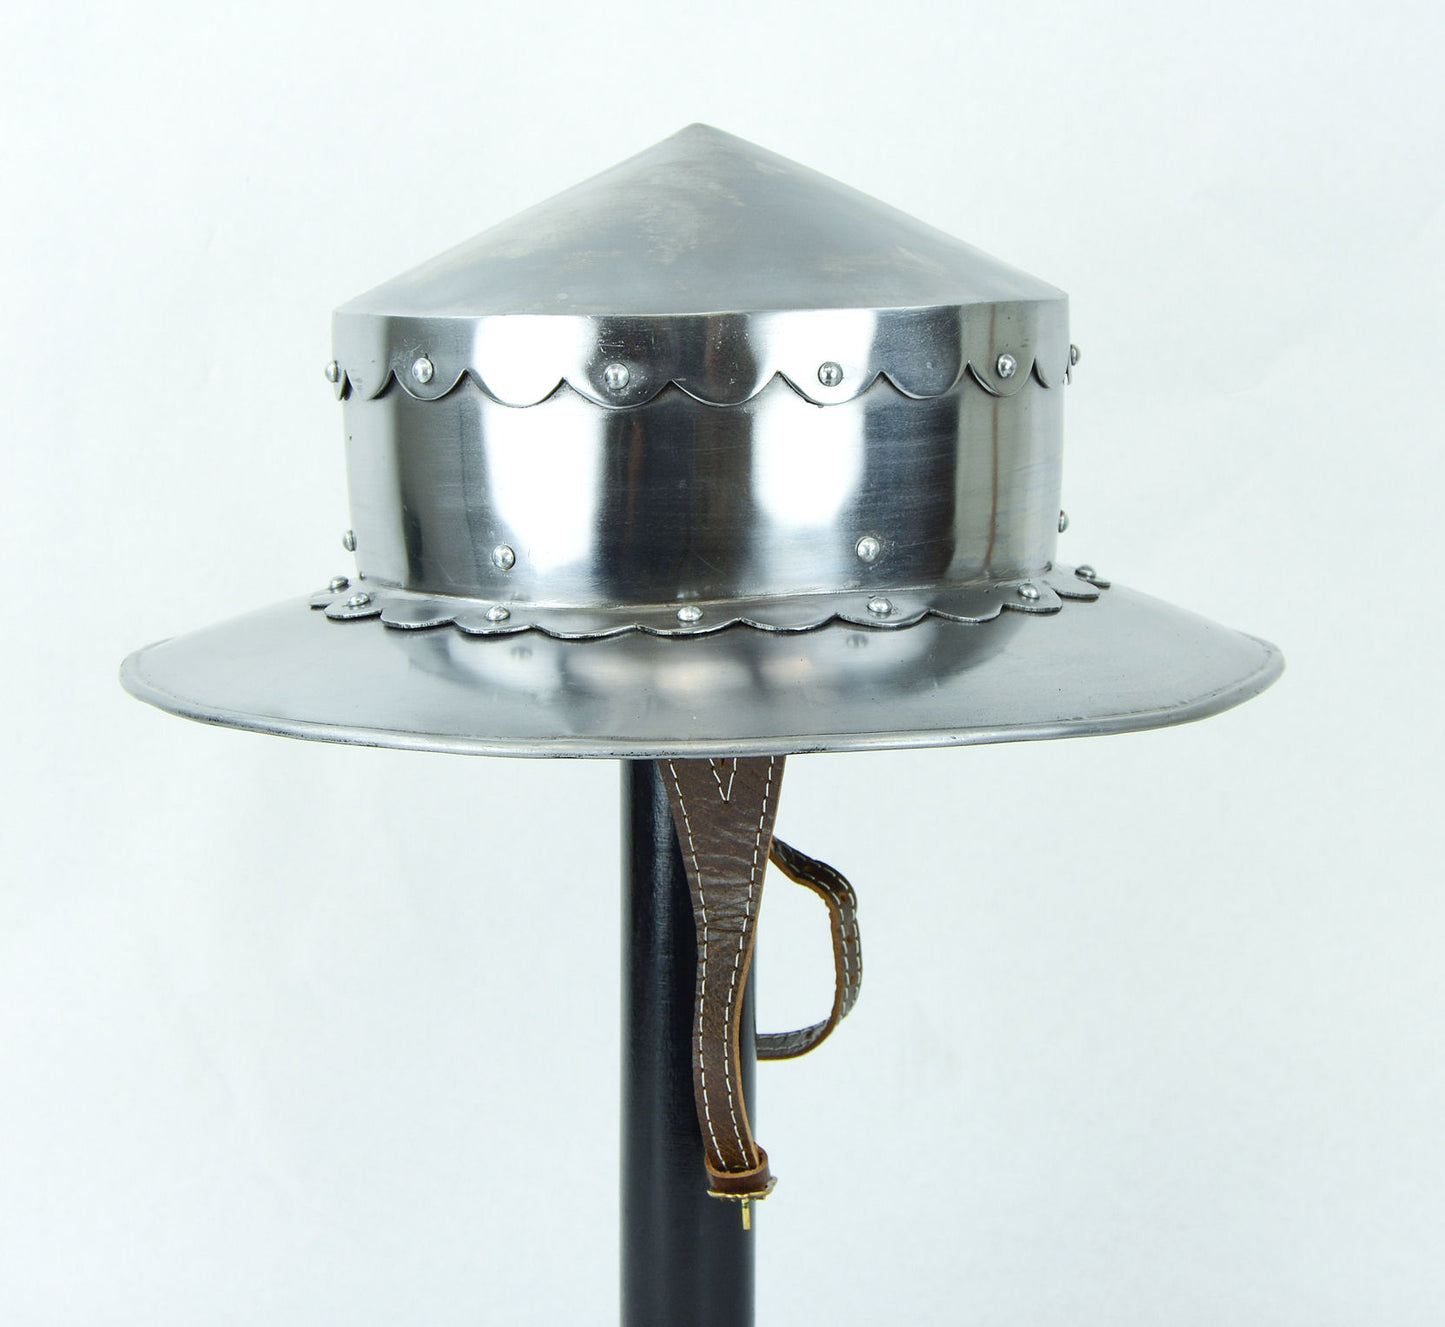 14th Century Kettle Helm - 16 Gauge Steel